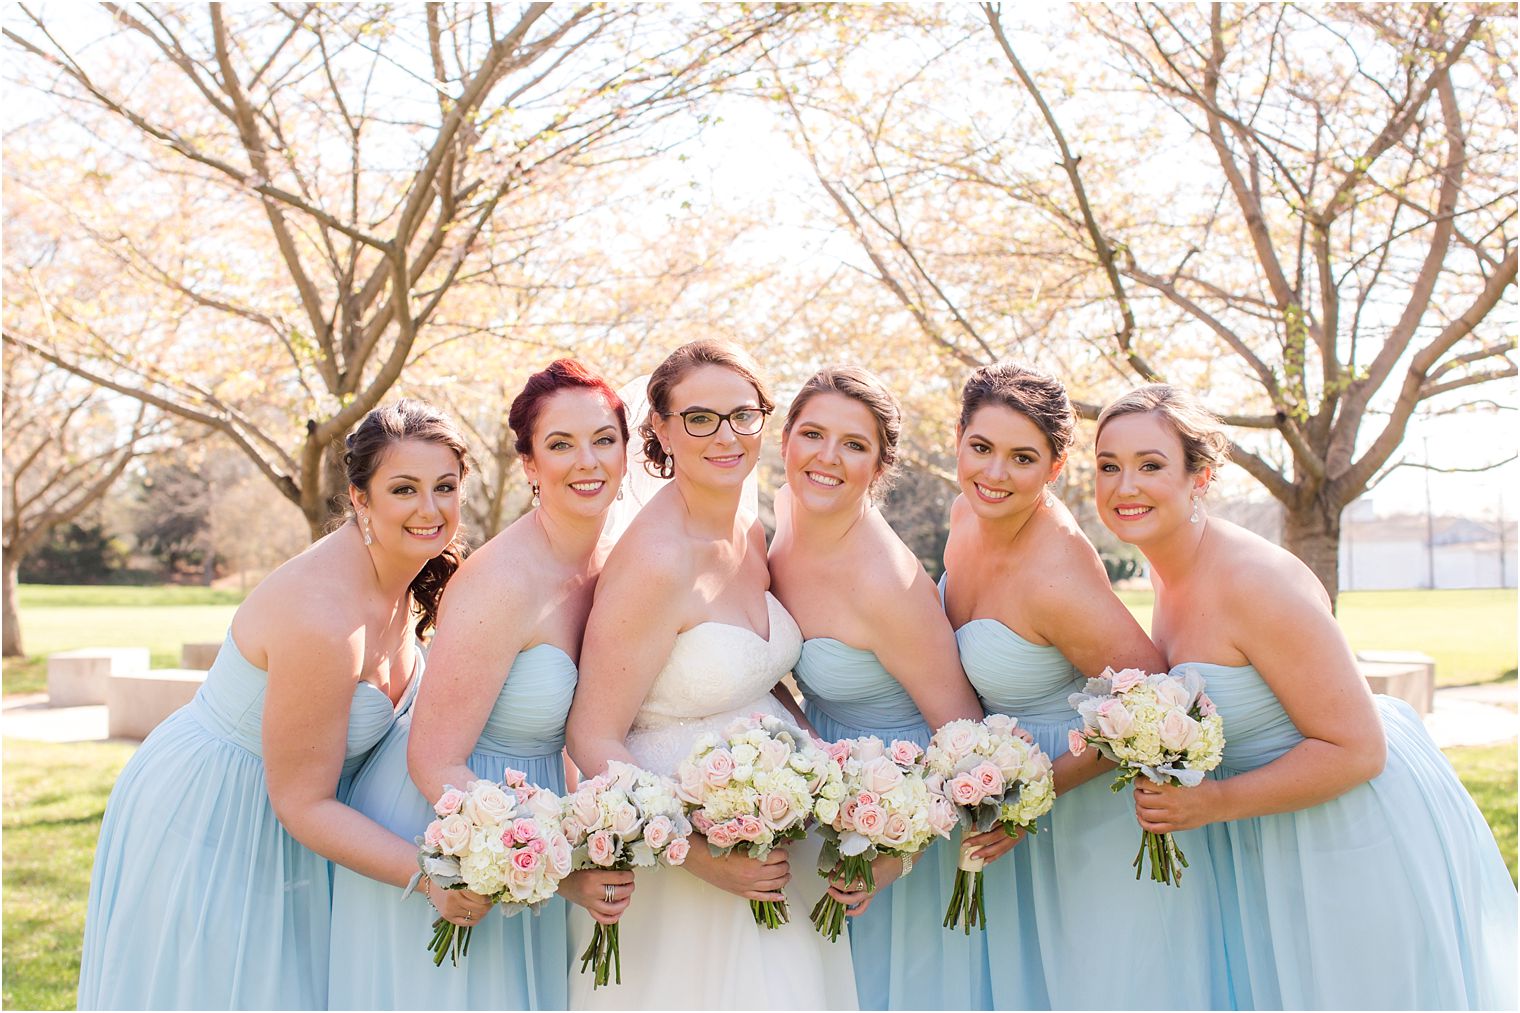 Bridesmaids in blue Bill Levkoff dresses